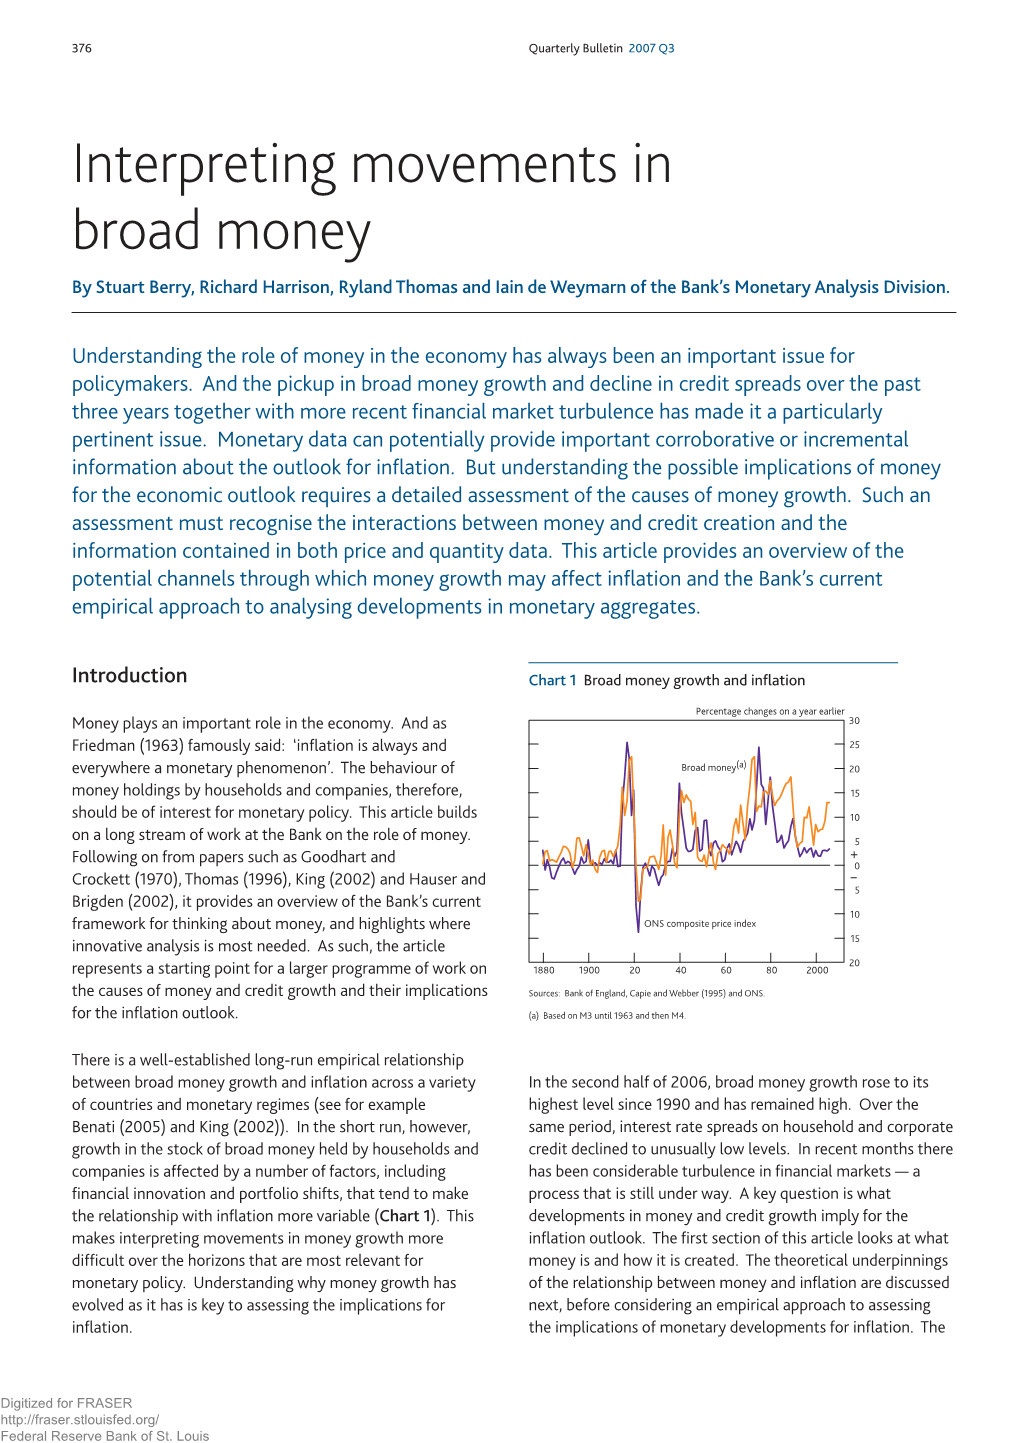 Interpreting Movements in Broad Money by Stuart Berry, Richard Harrison, Ryland Thomas and Iain De Weymarn of the Bank’S Monetary Analysis Division